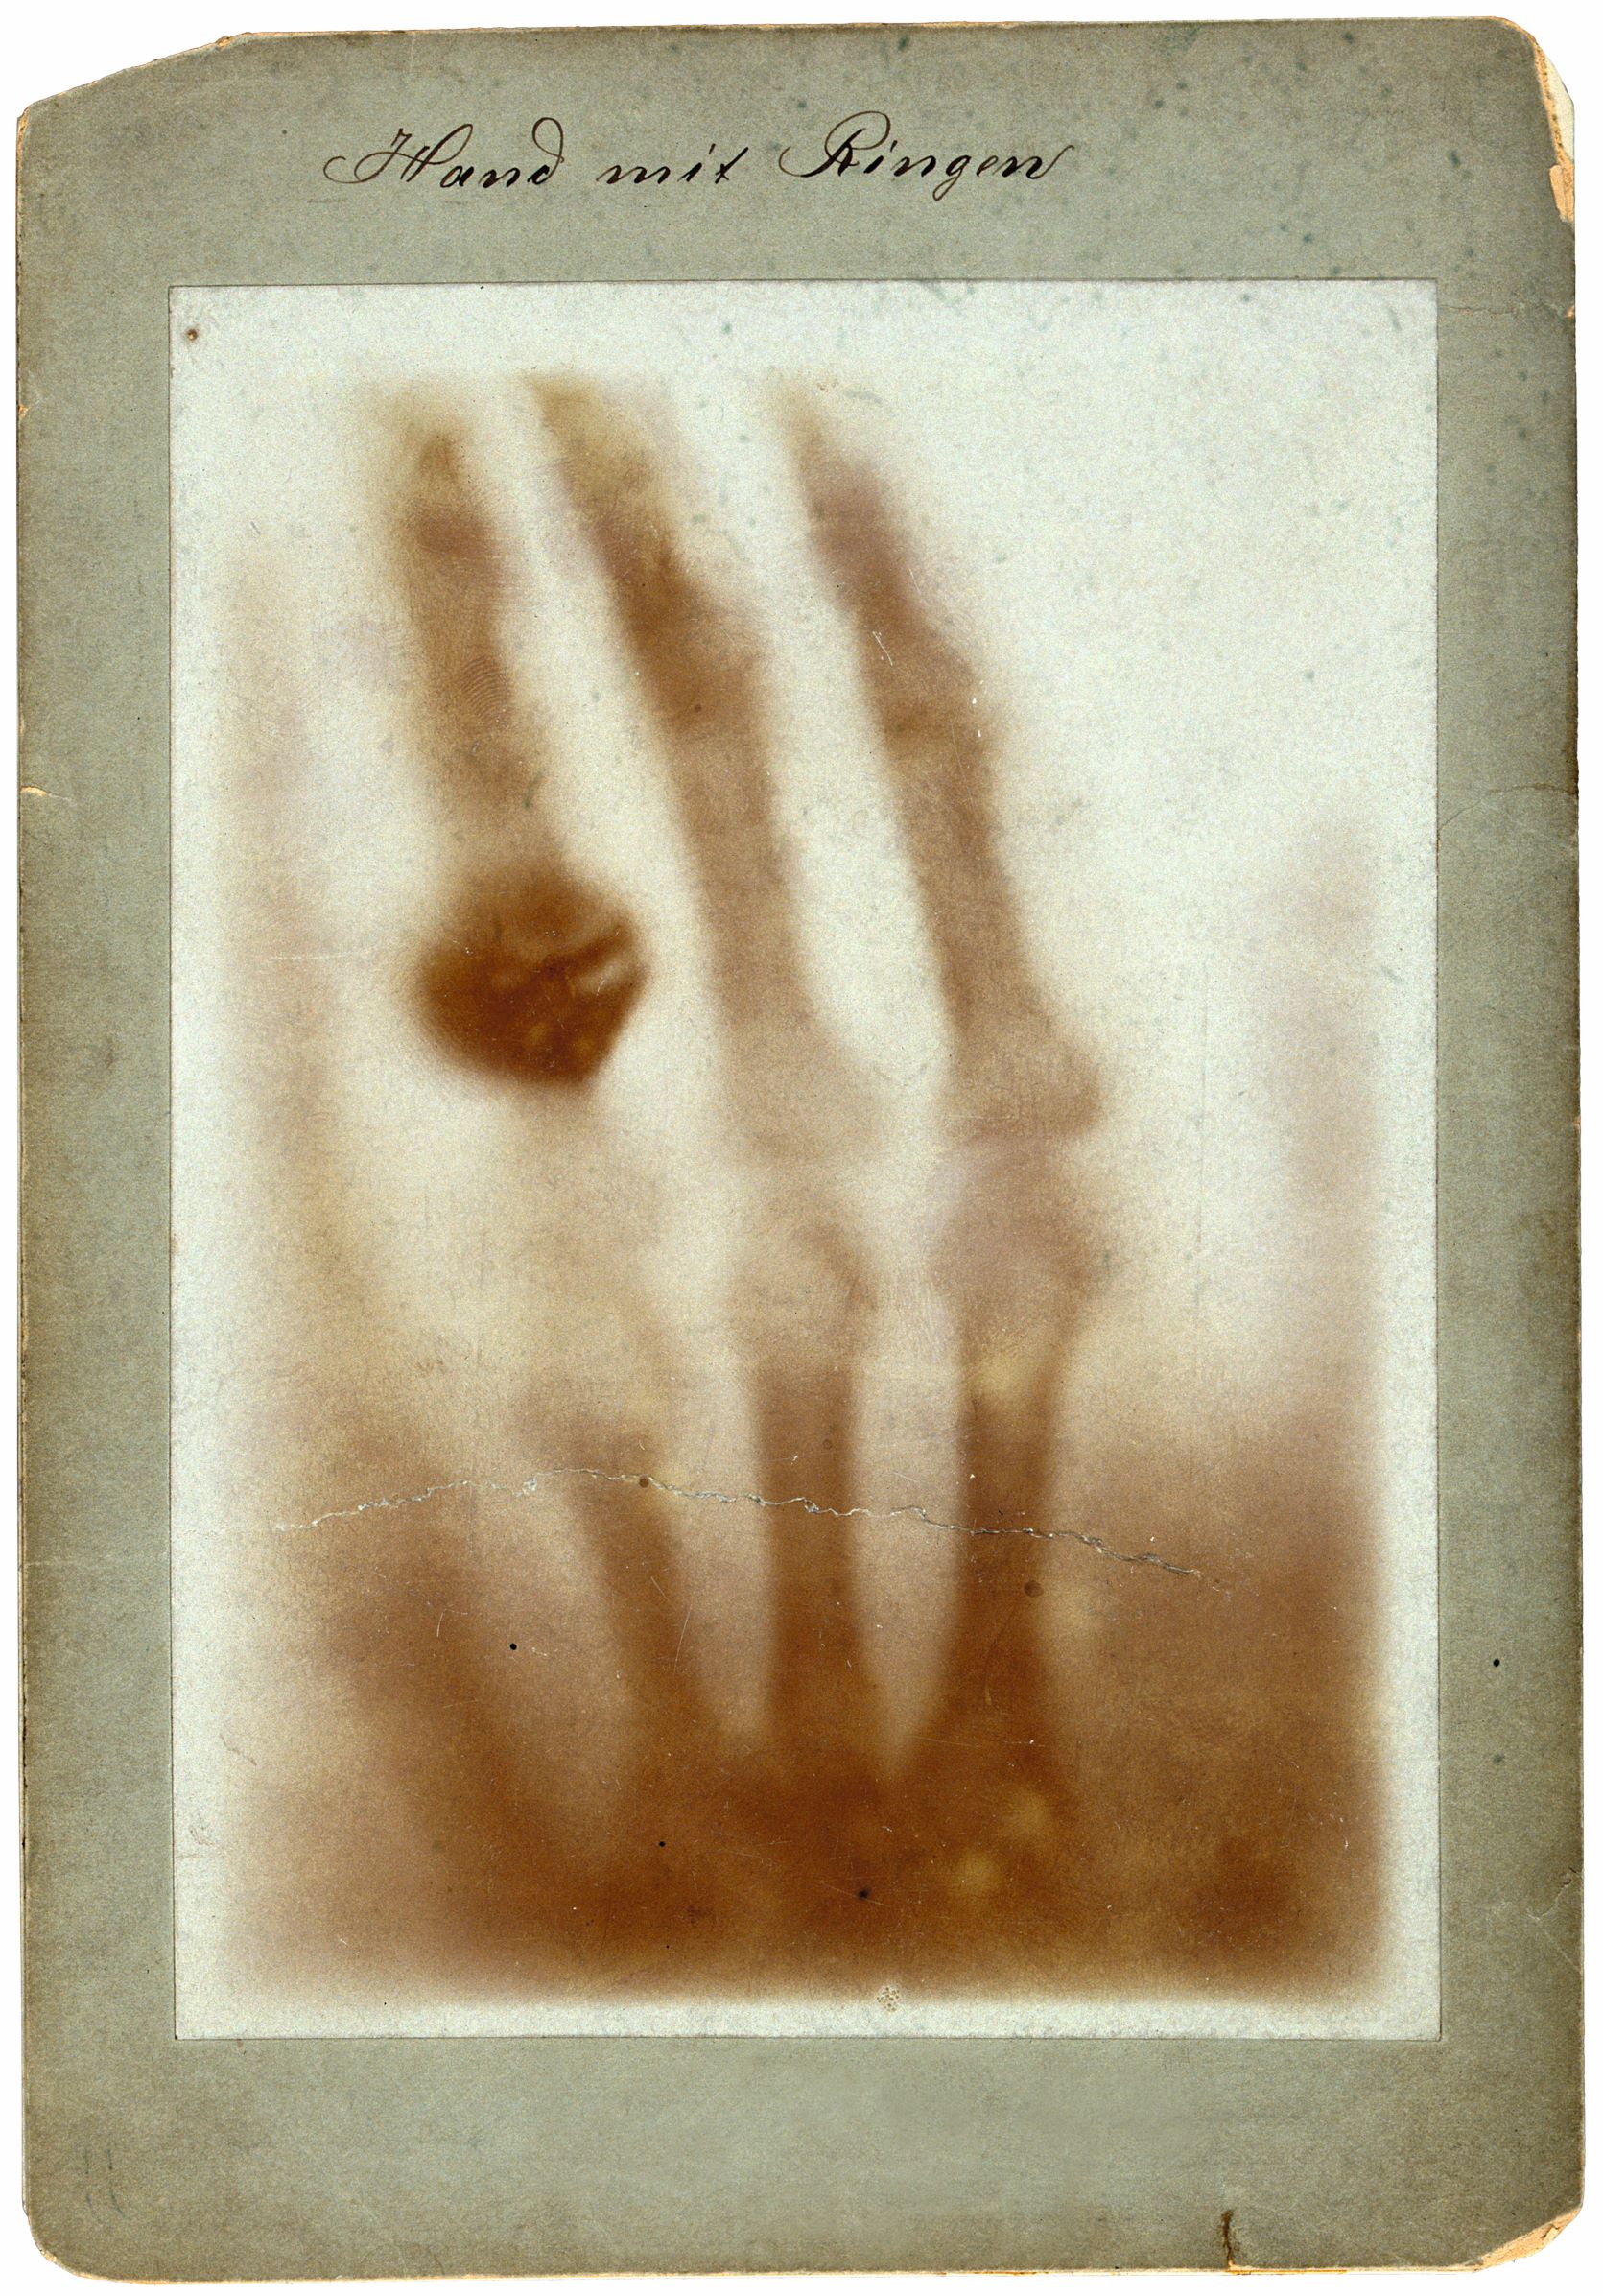 The Art of Anatomy - Wilhelm Röntgen's X-ray